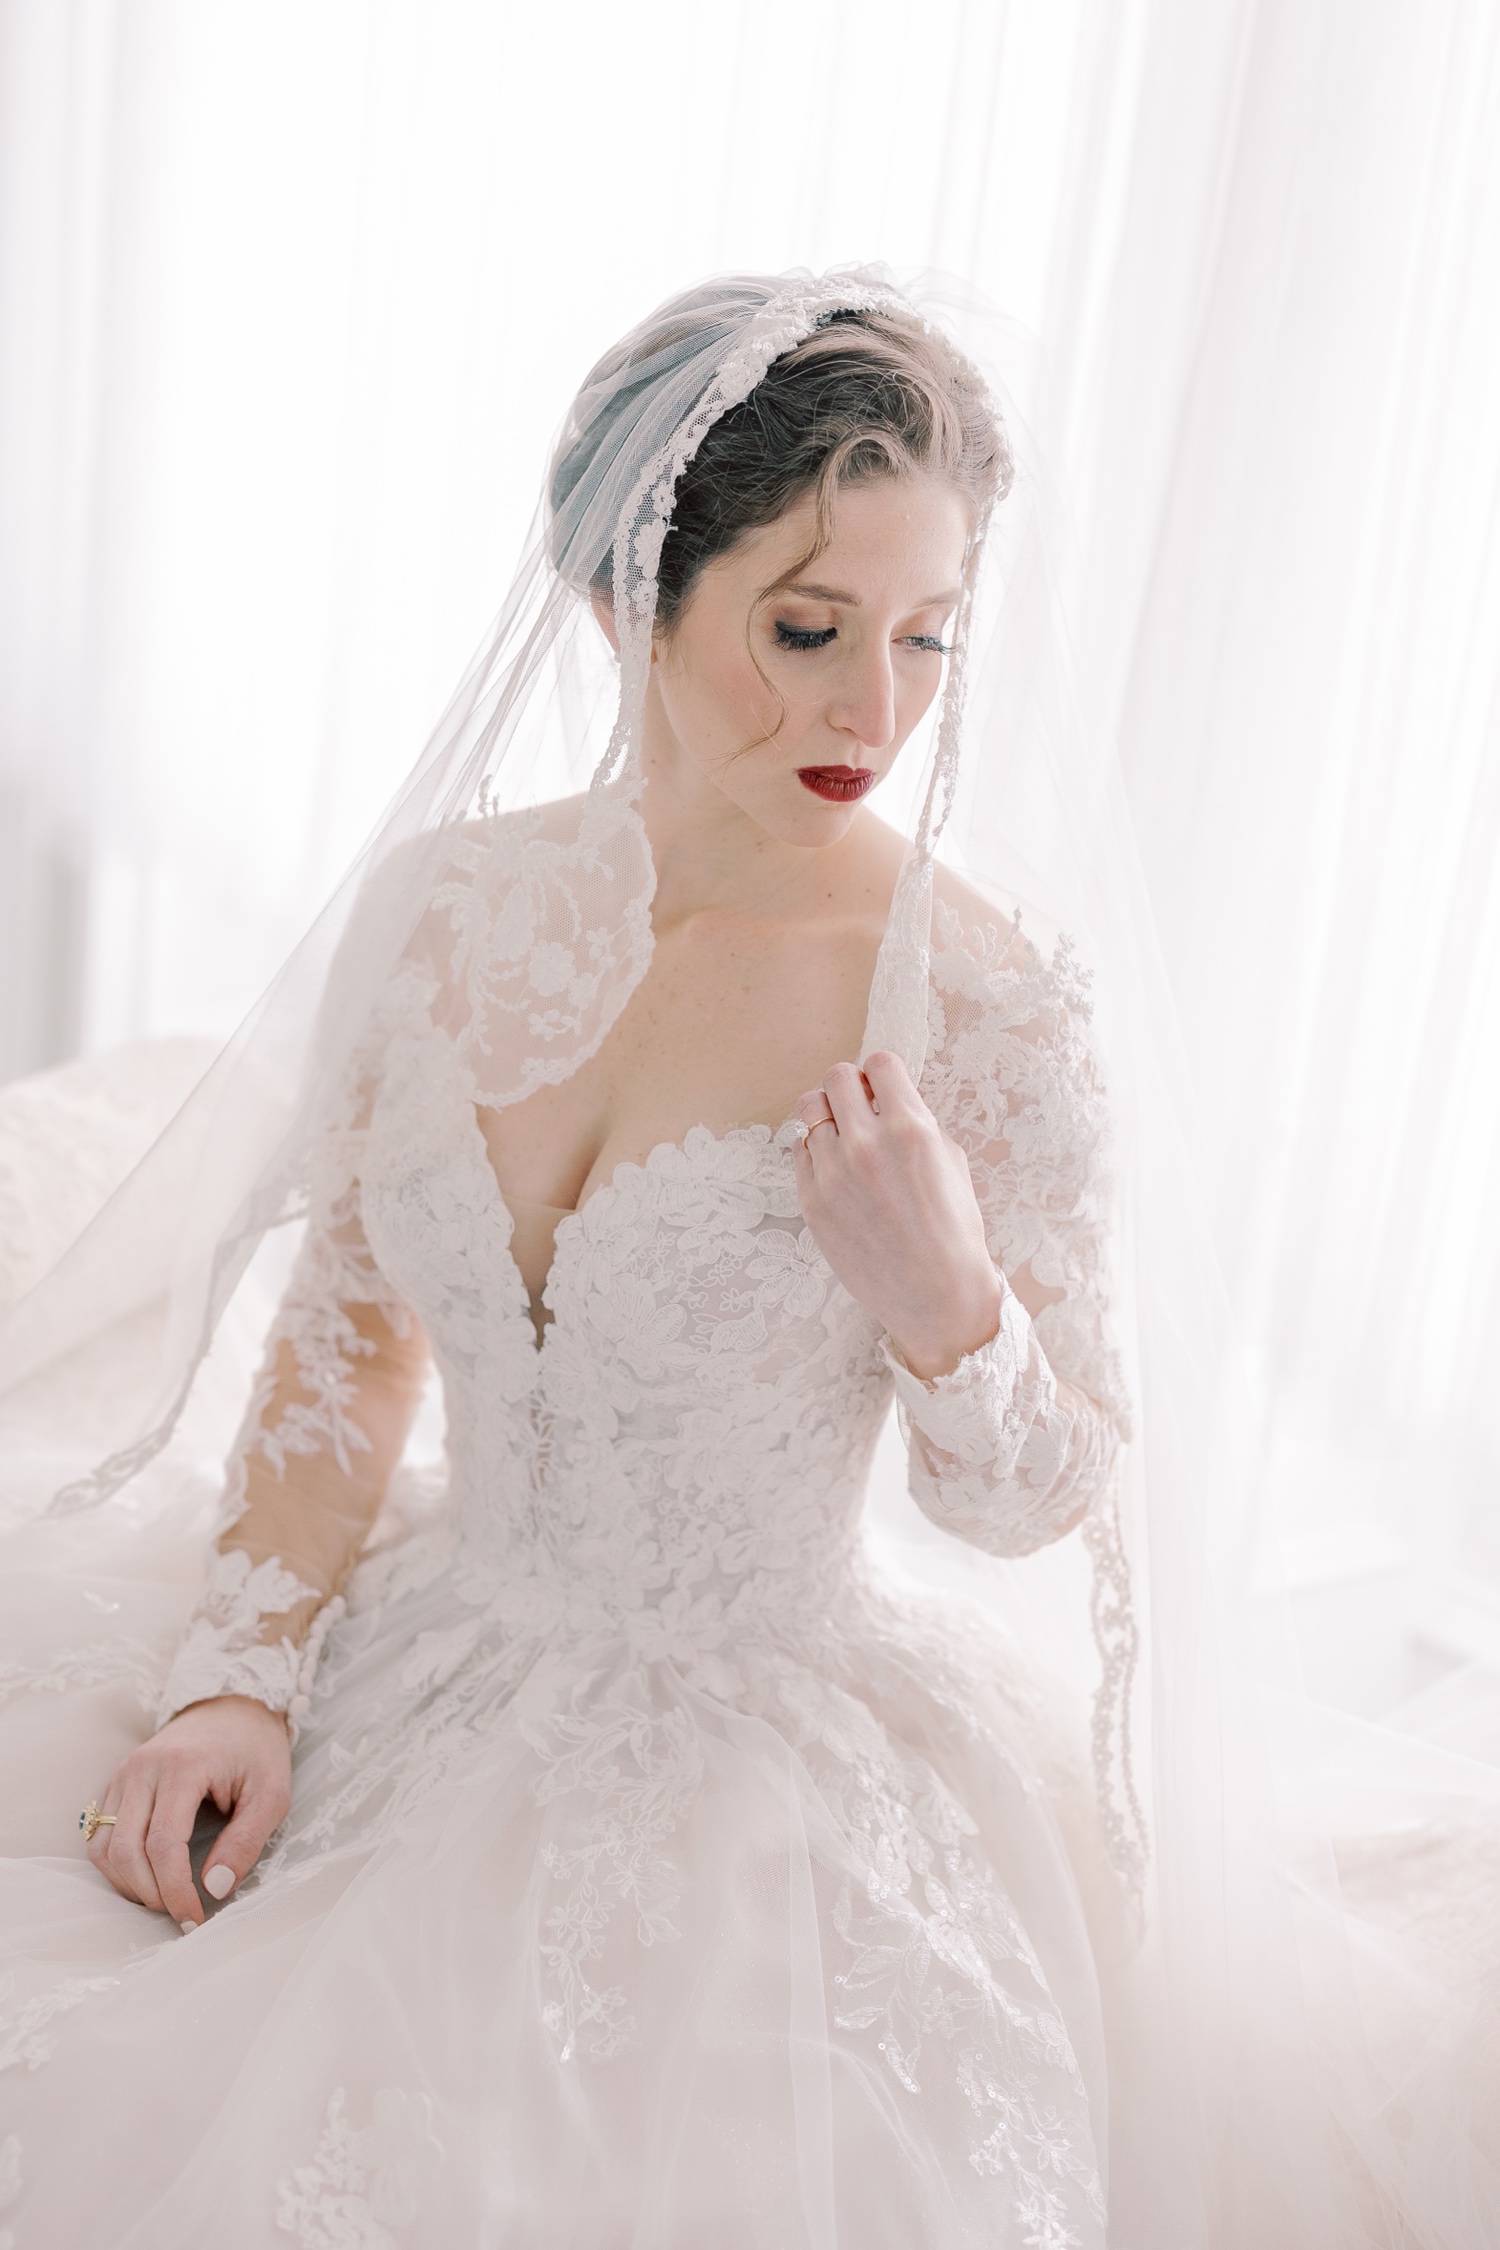 Loch Aerie Mansion Wedding | Pennsylvania Wedding Photographer